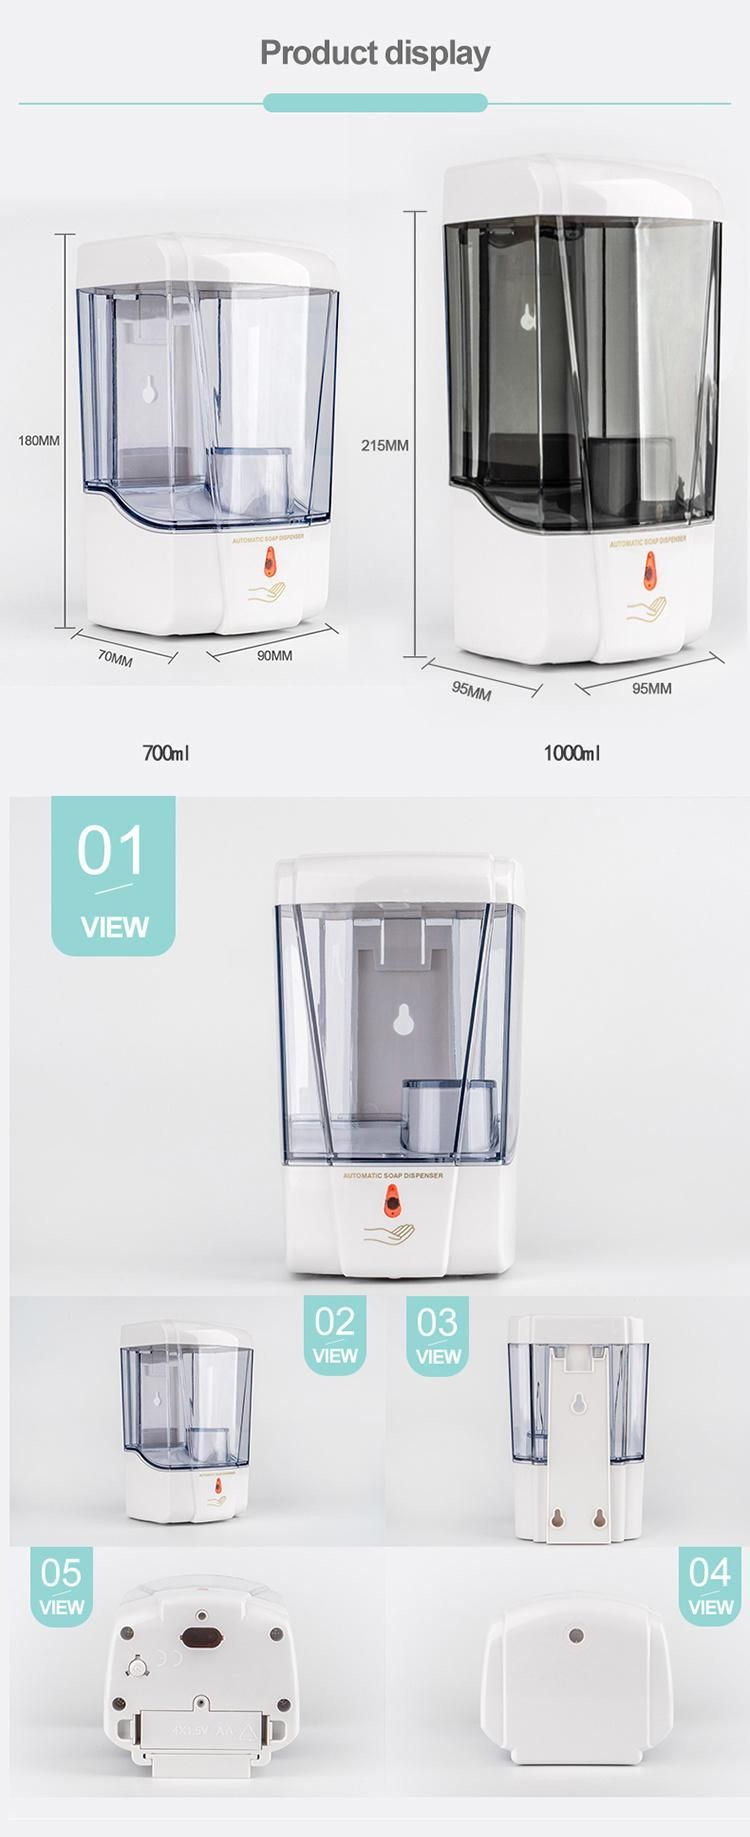 Saige 1000ml Wall Mount Soap Dispenser Automatic Hand Sanitizer Dispenser